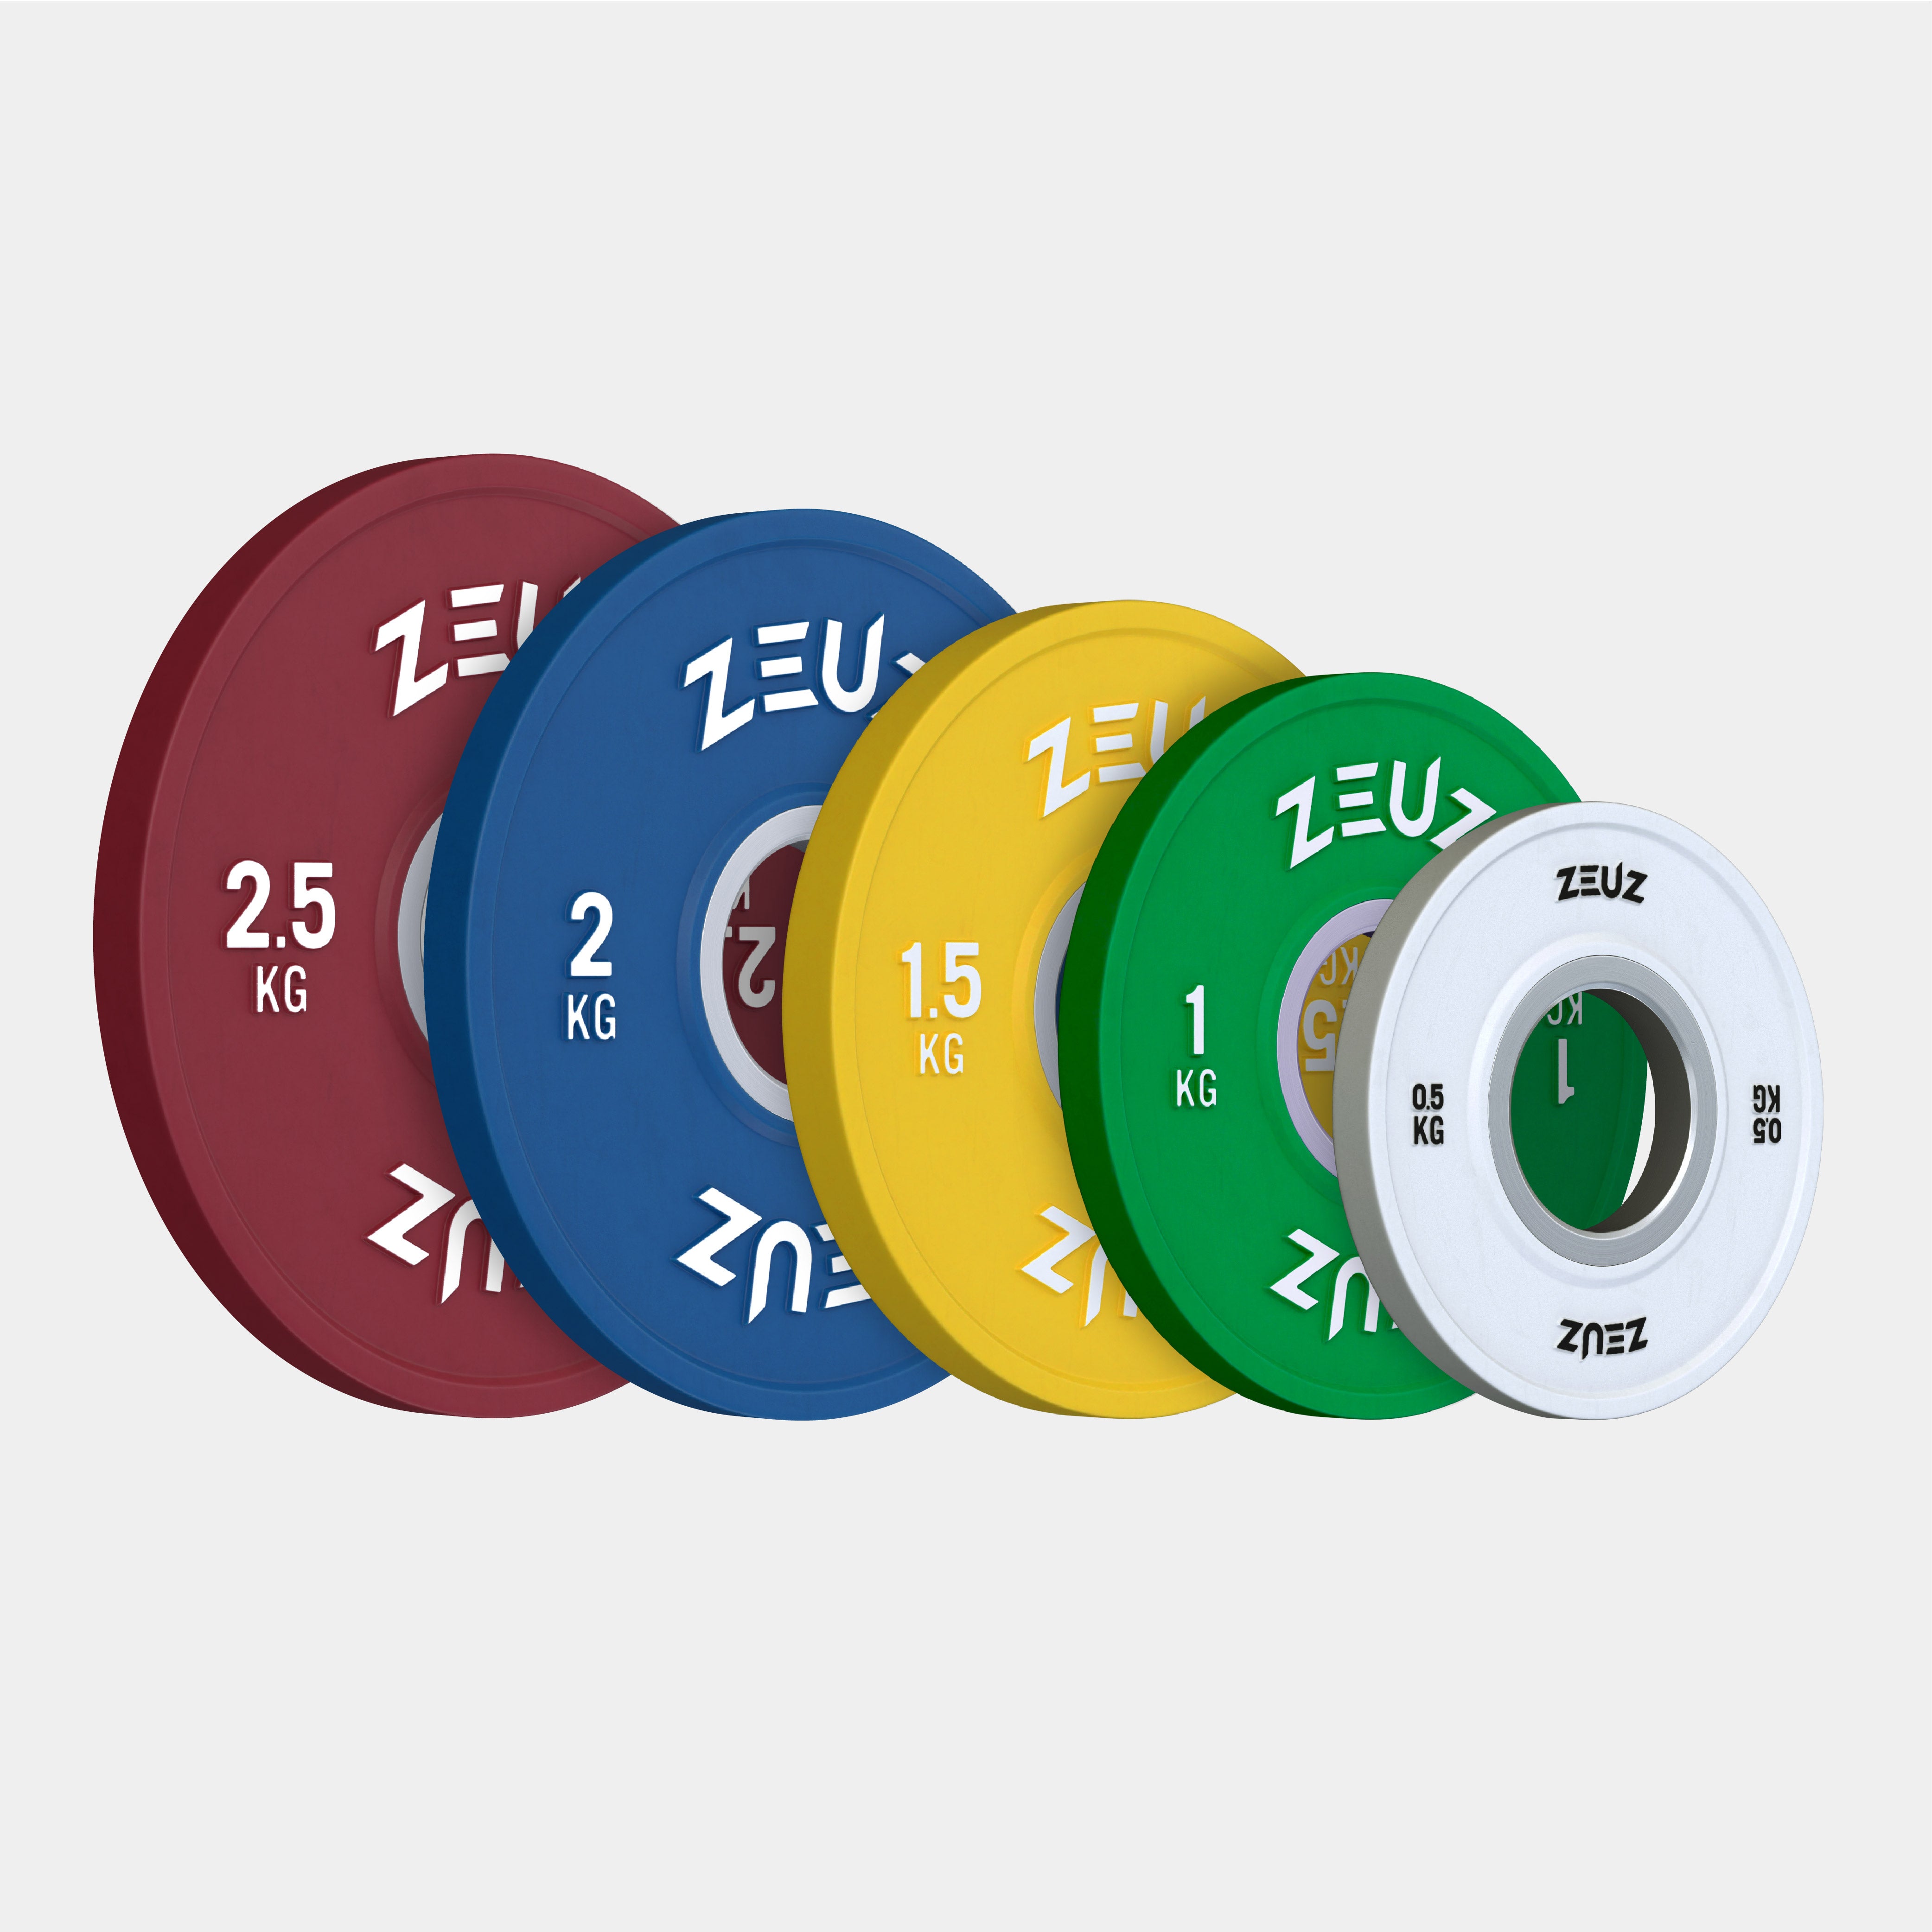 ZEUZ Weight Plate - 2 Pcs - Change plates 2.0